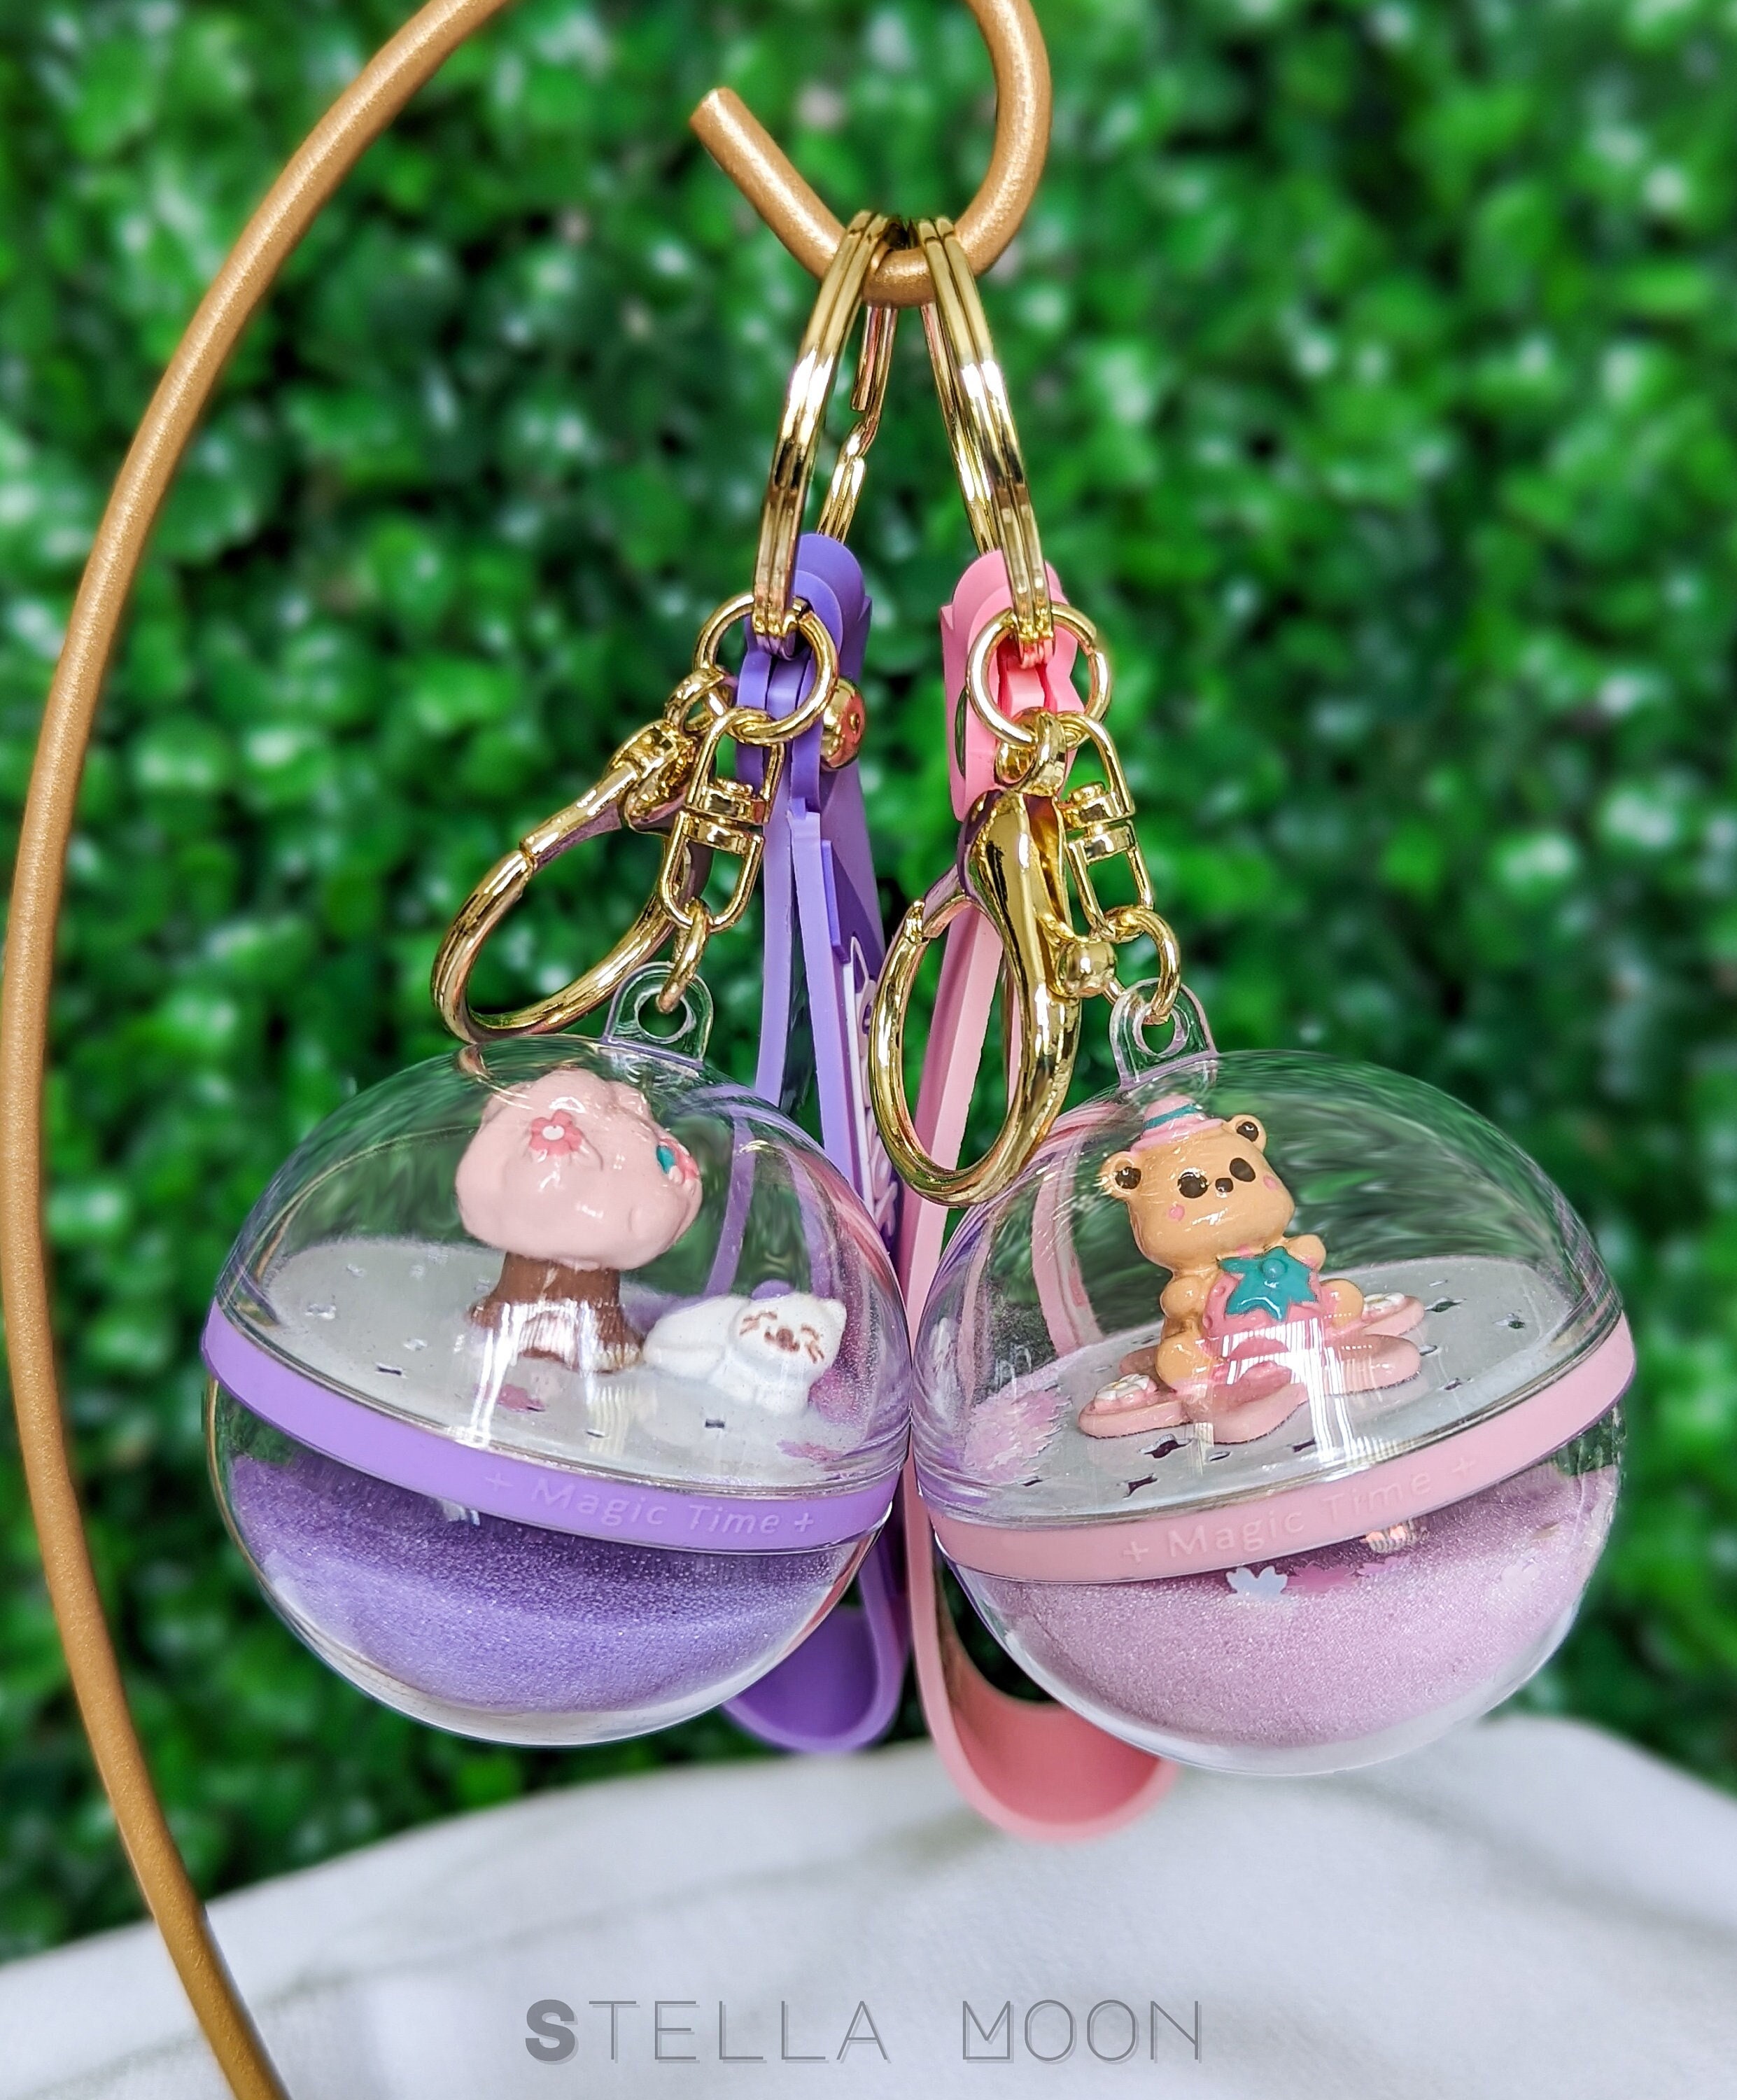 Custom Boba Liquid Keychain, Mermaid Shaker Ice Cube Drink Key Ring Charm,  Cute Bubble Tea Accessory, Kawaii Personalize Anxiety Fidget Toy 